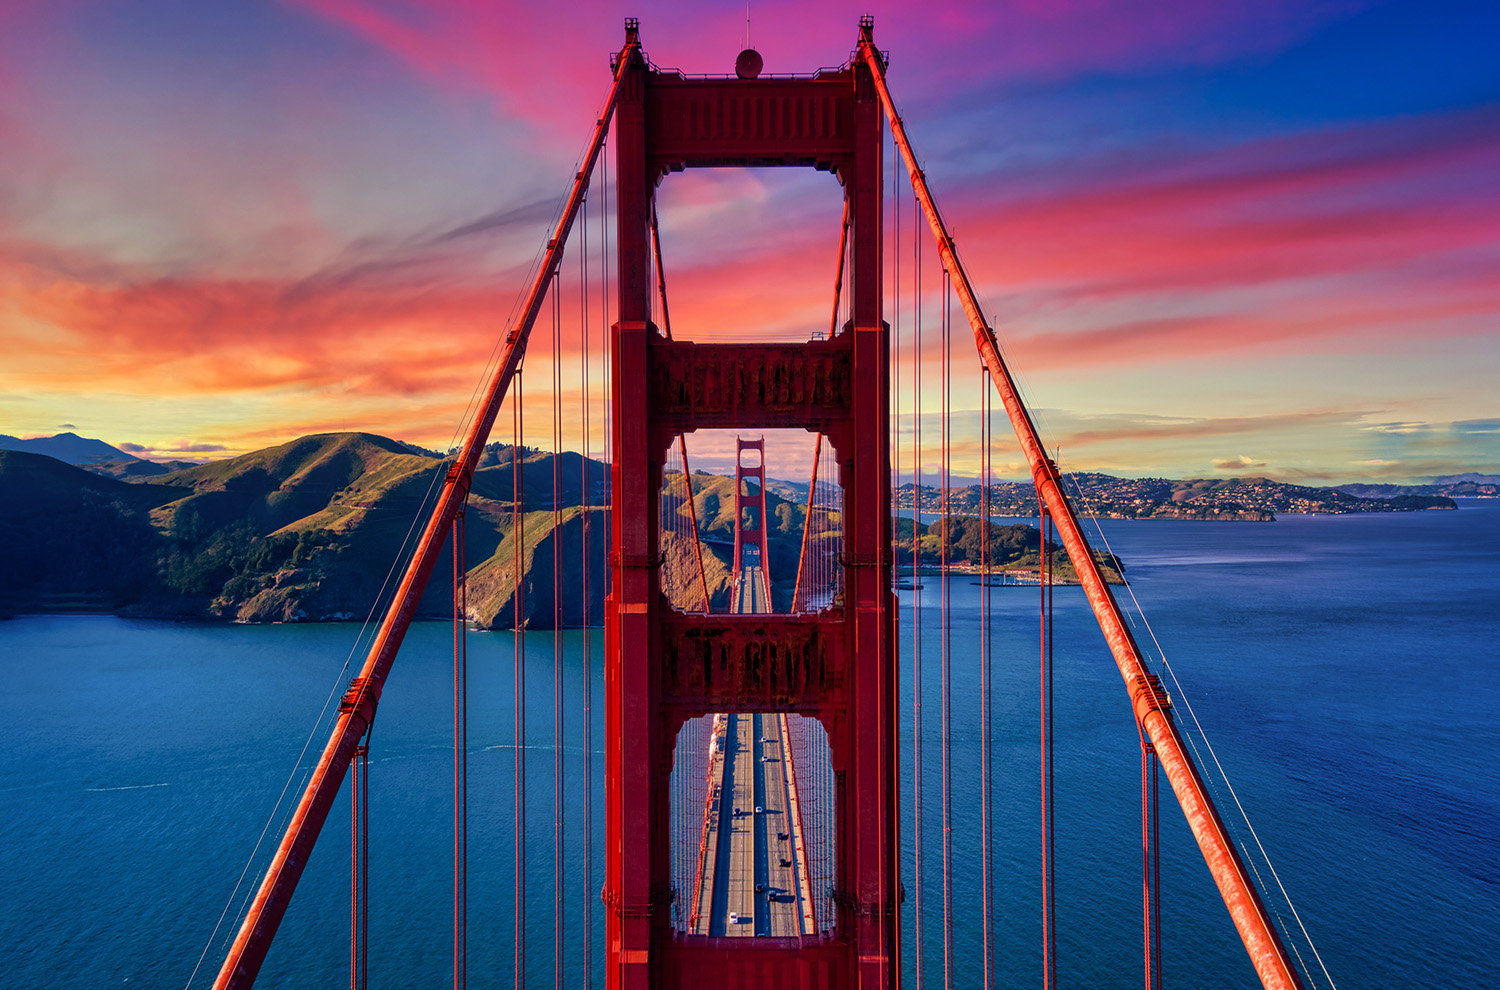 View of the Golden Gate Bridge by Venti Views via Unsplash